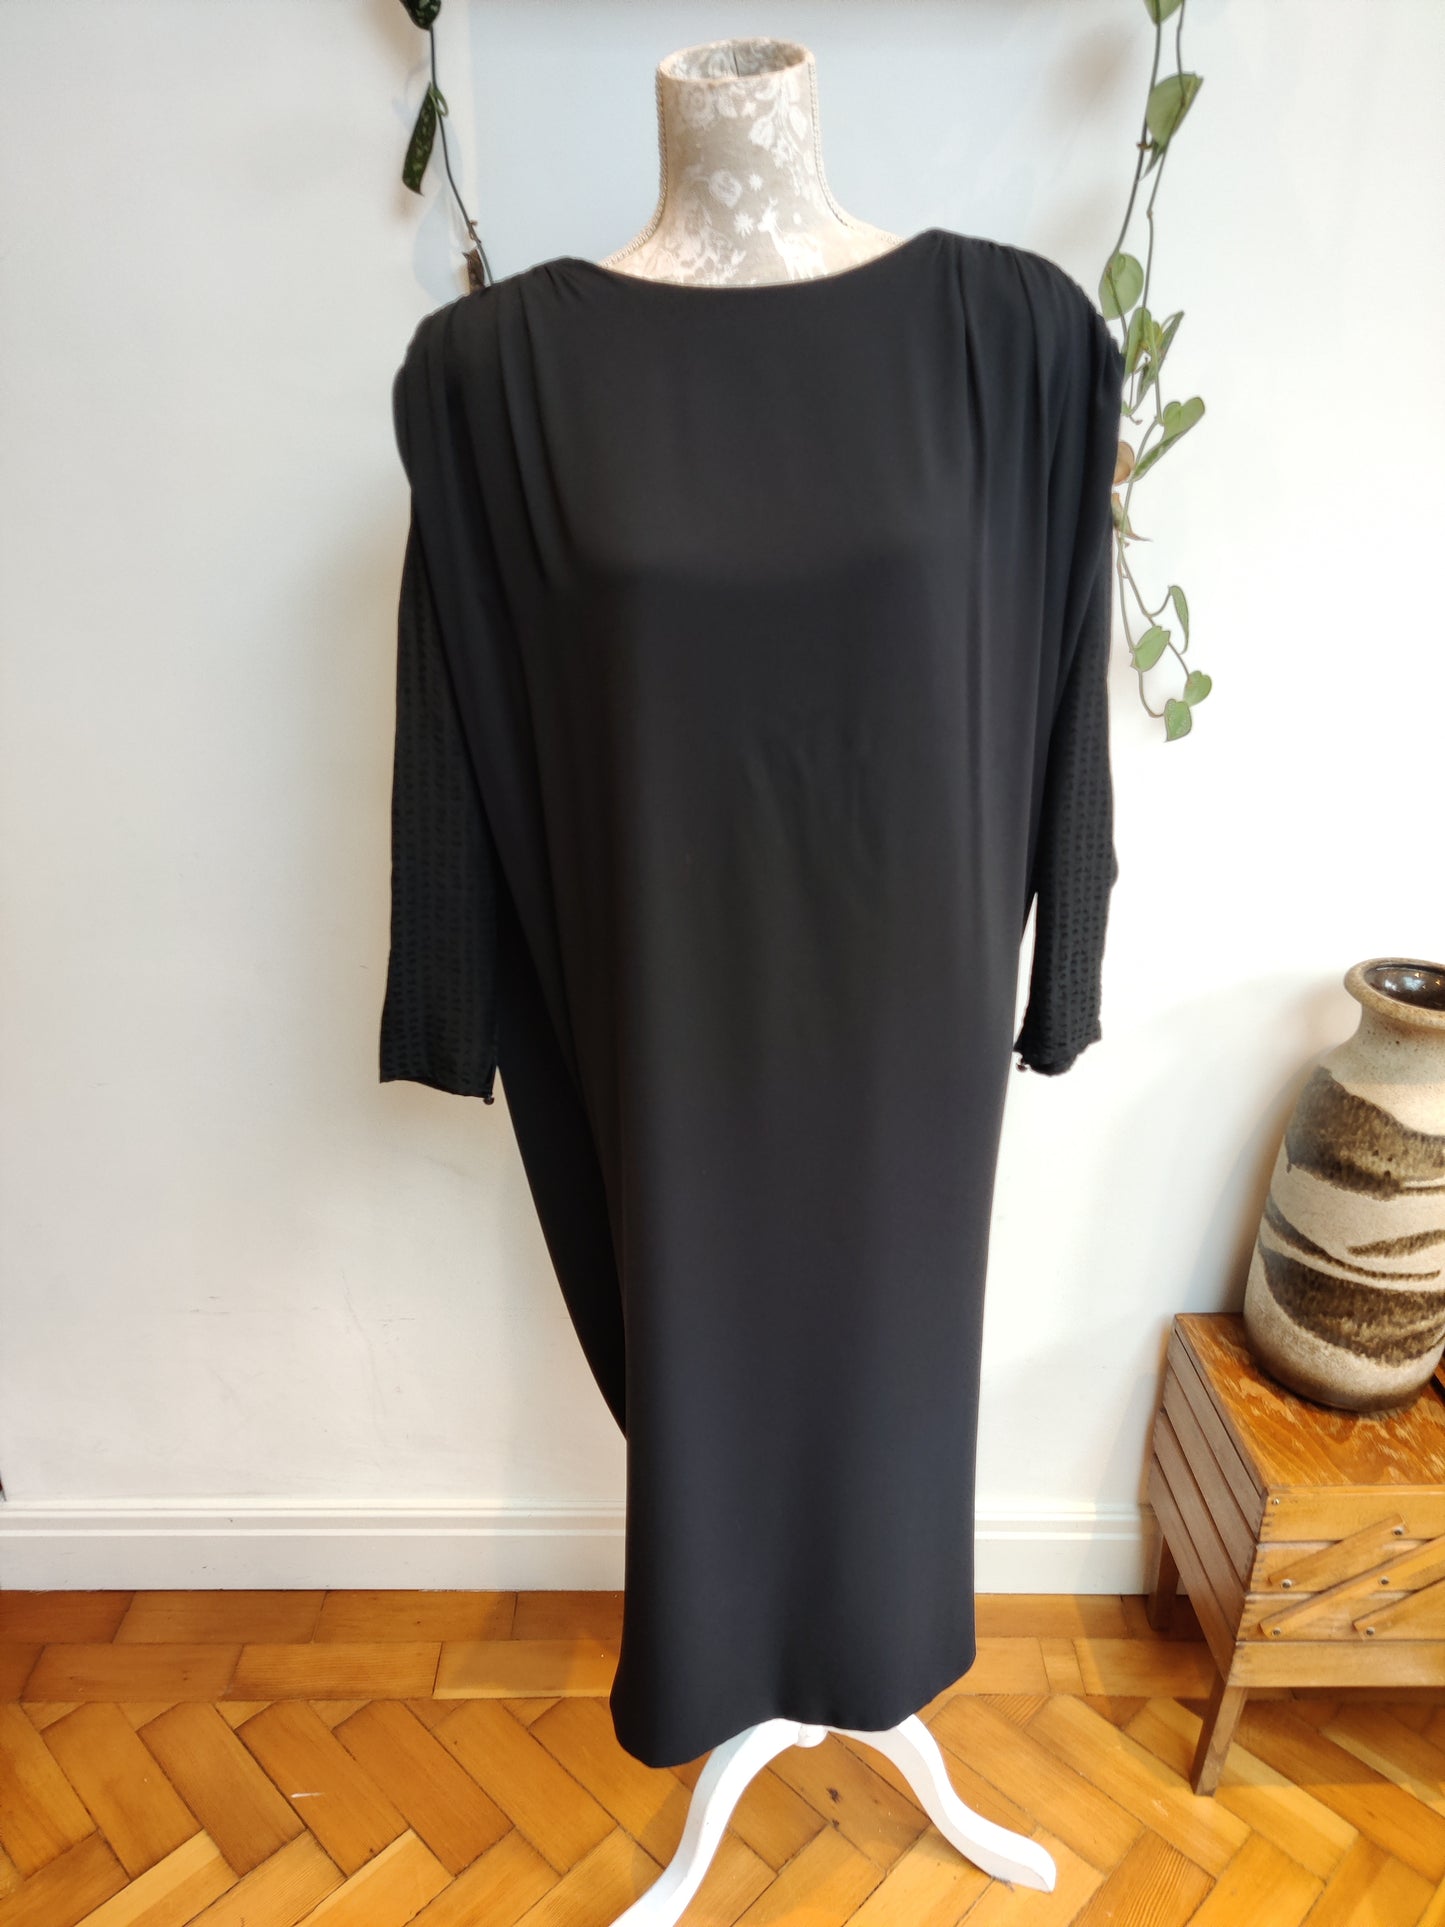 Stunning vintage black dress with cape like drape back. Size 12-16.